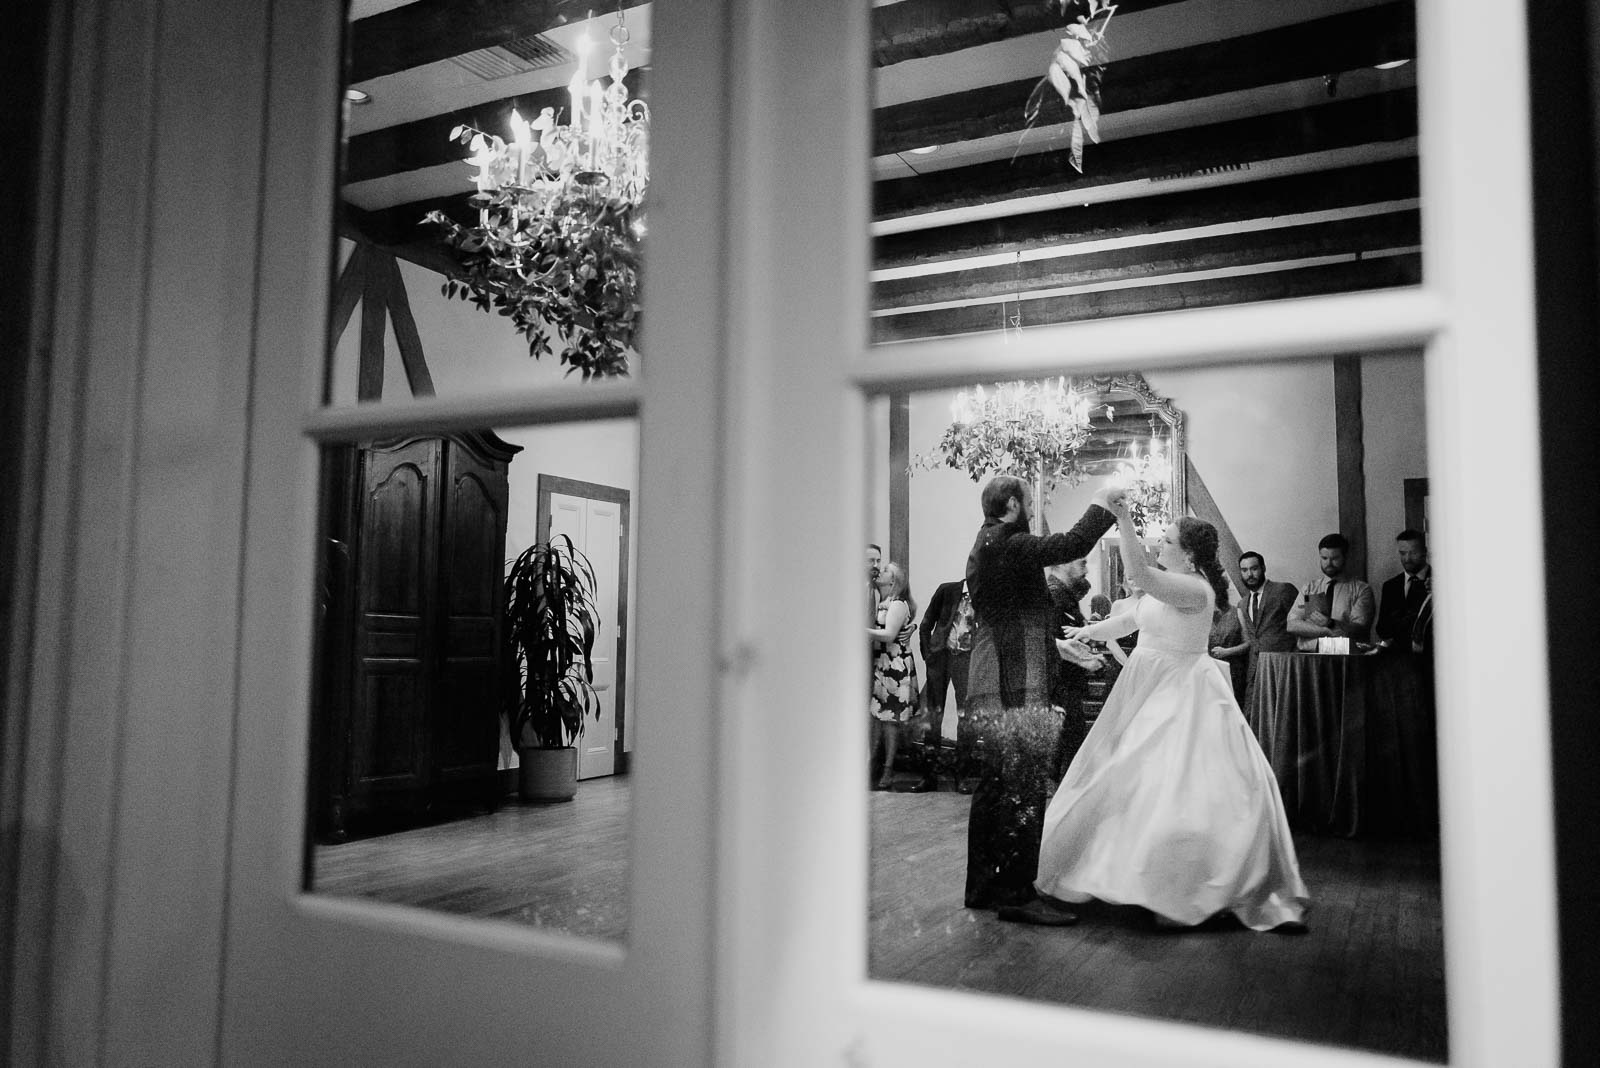 045 Club Giraud Wedding ceremony reception Leica photographer Philip Thomas Photography